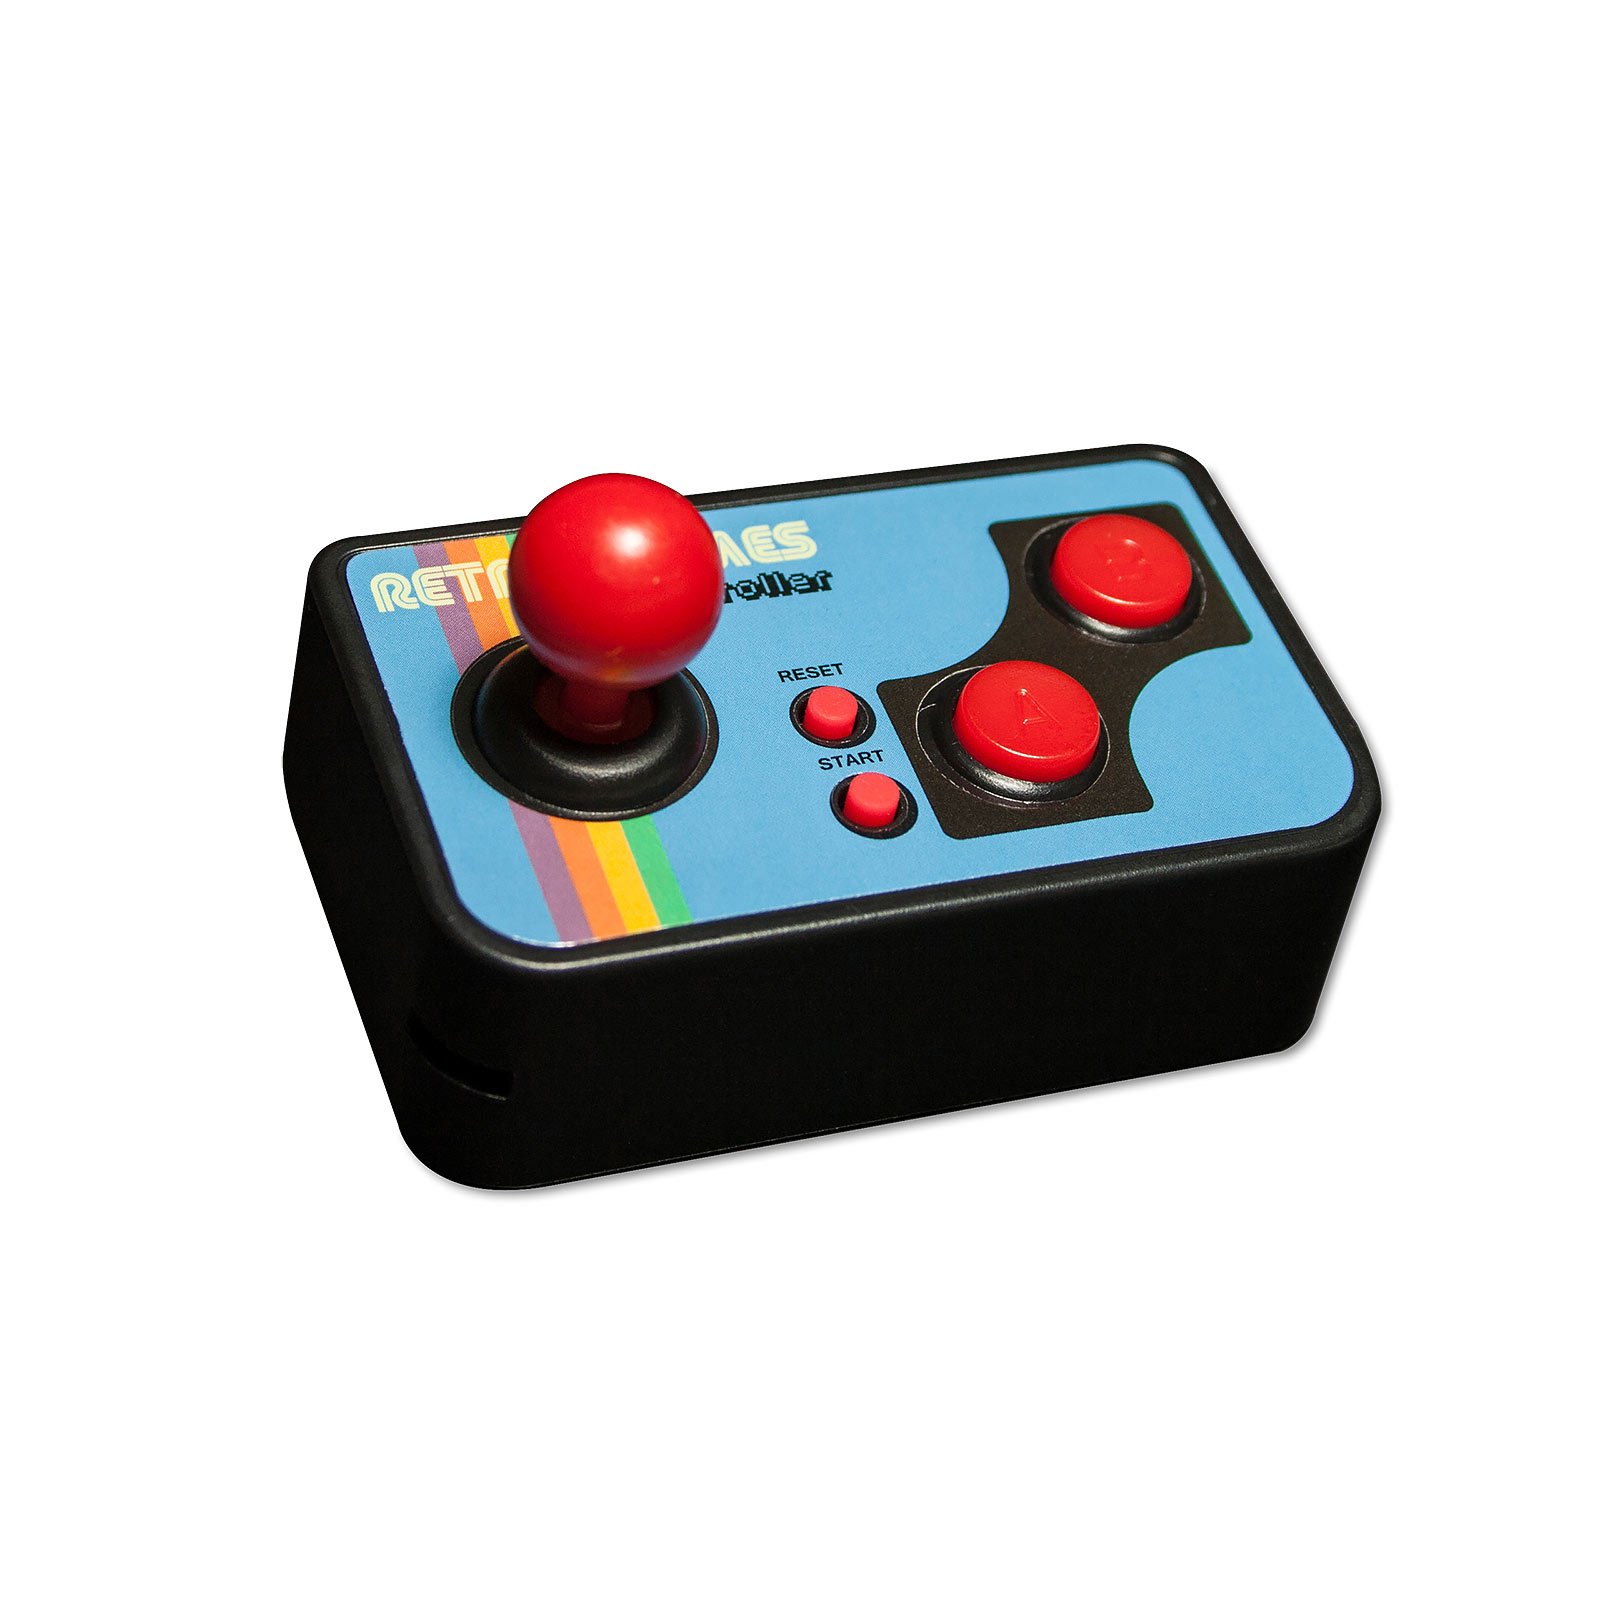 Retro TV Video Game Controller with Mini Games